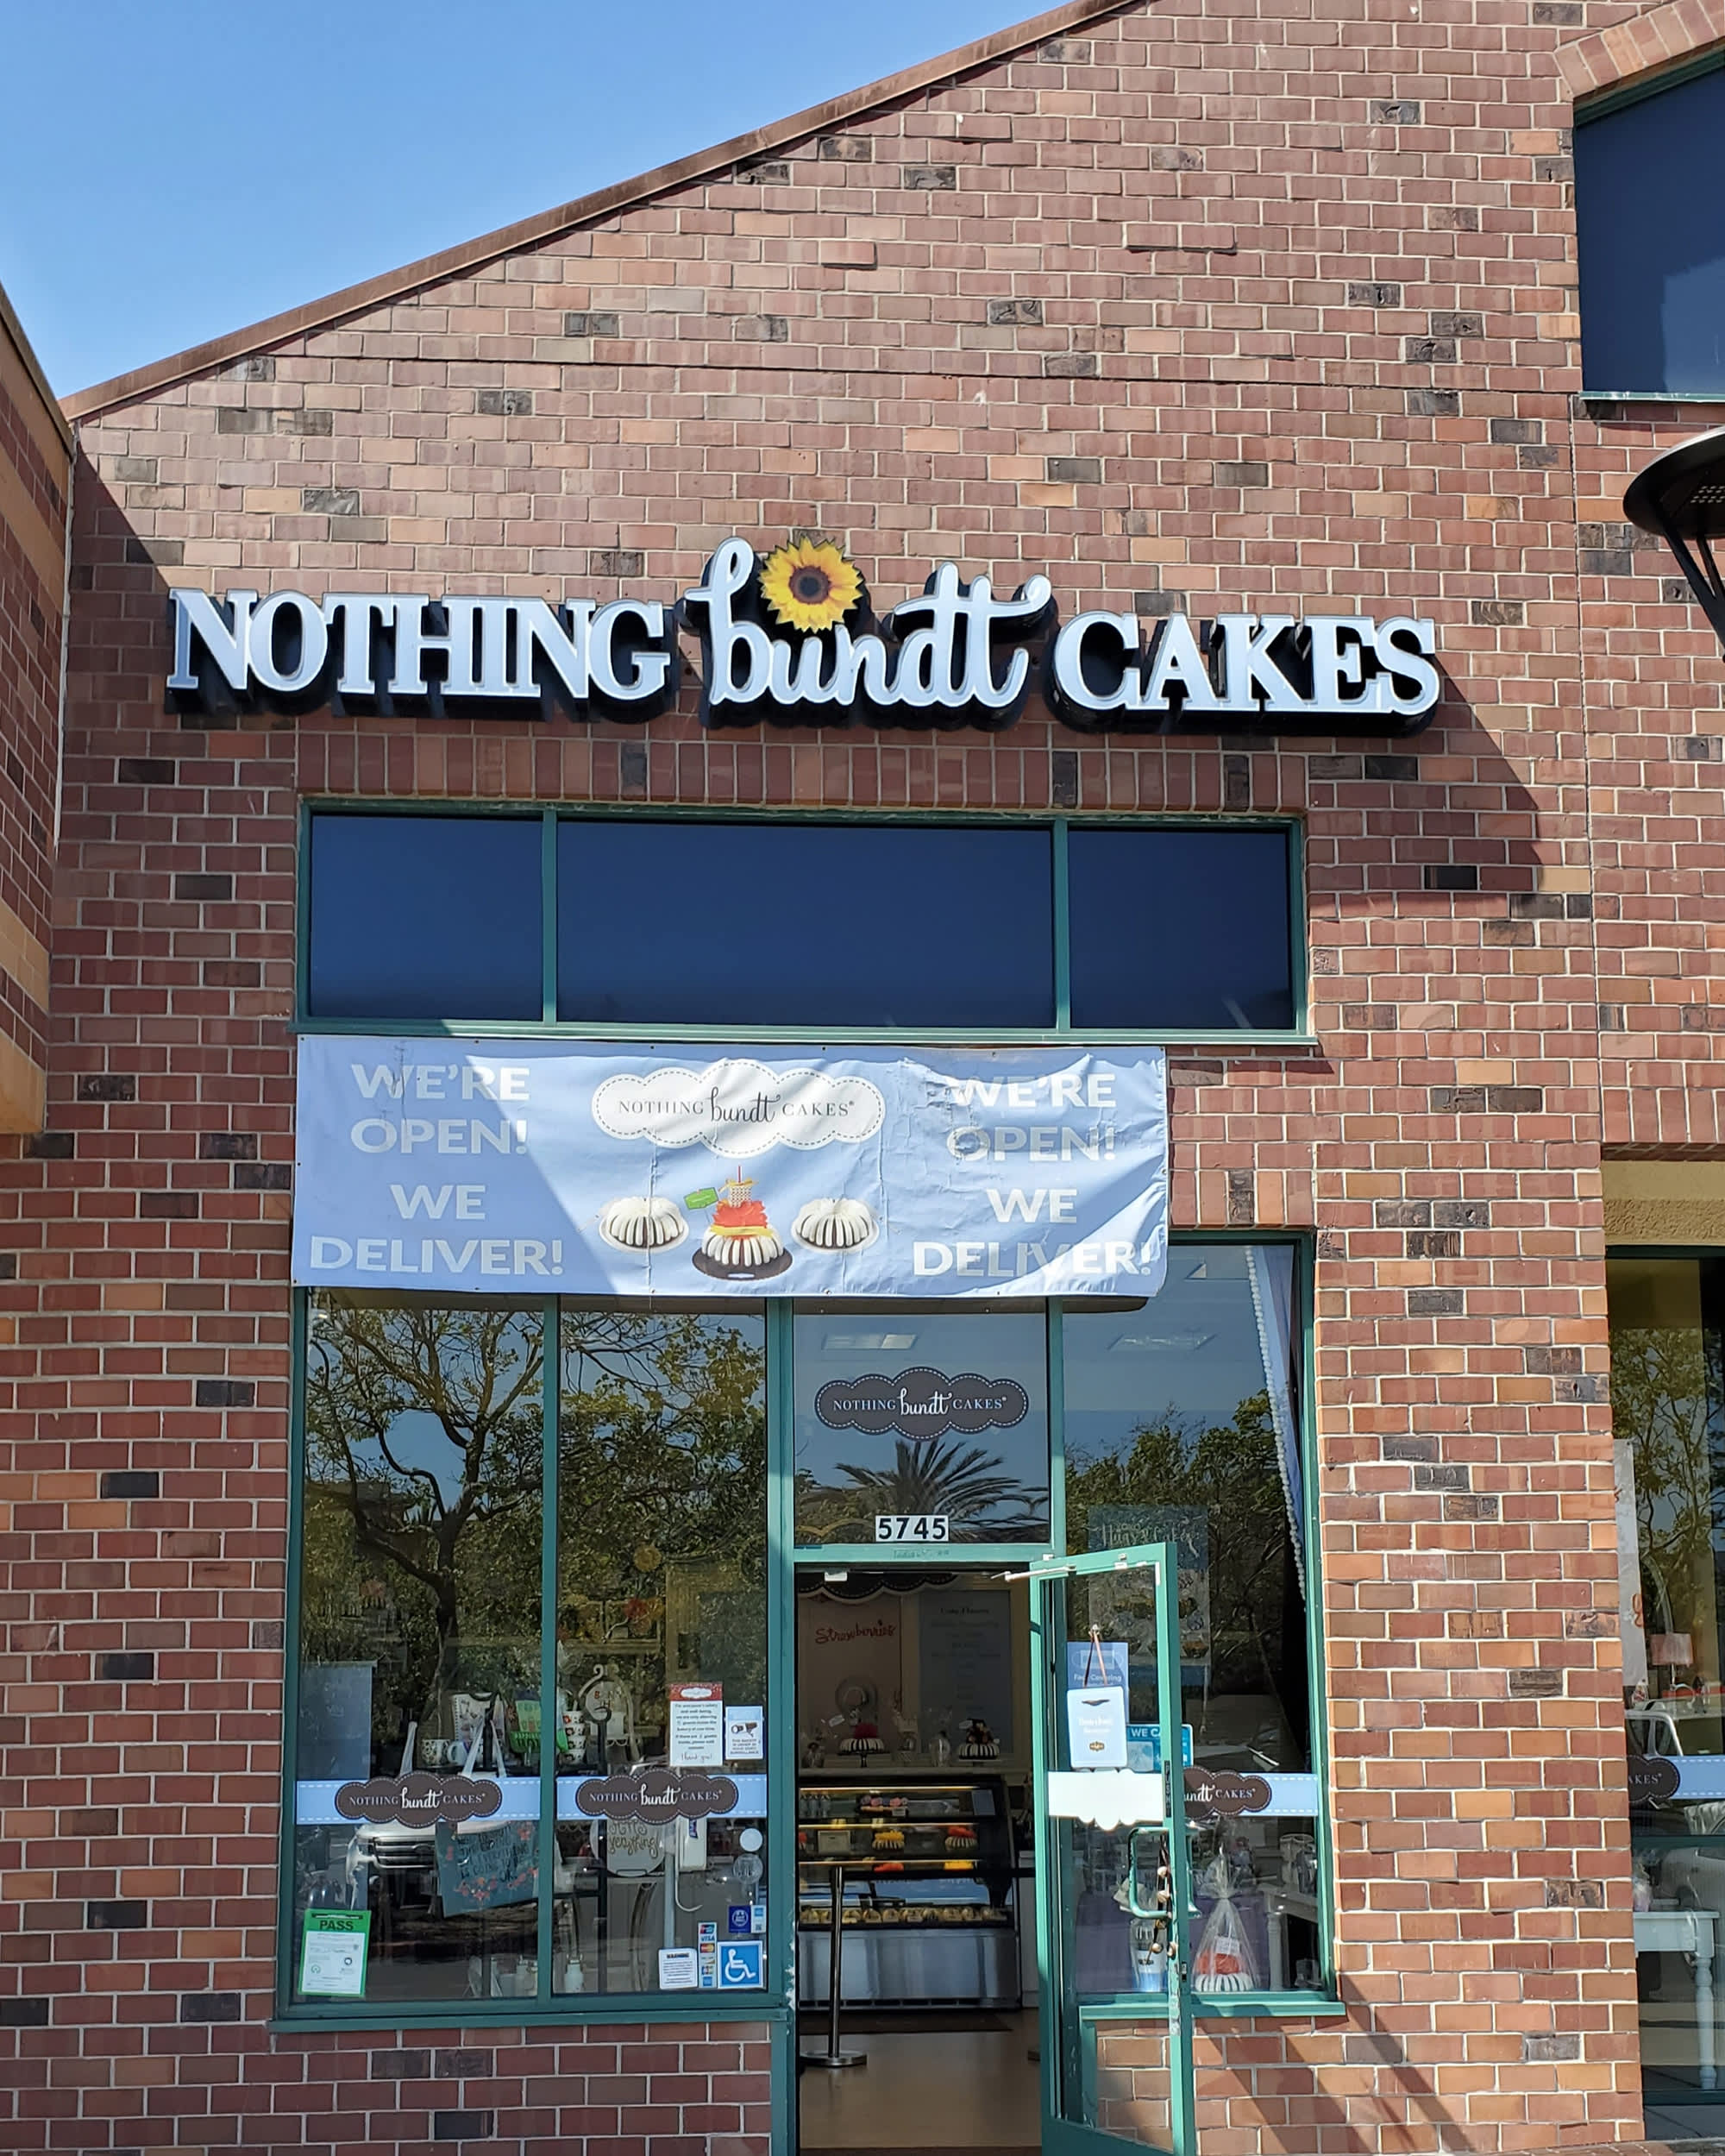 Shop Our Bundt Cake Flavors - Nothing Bundt Cakes